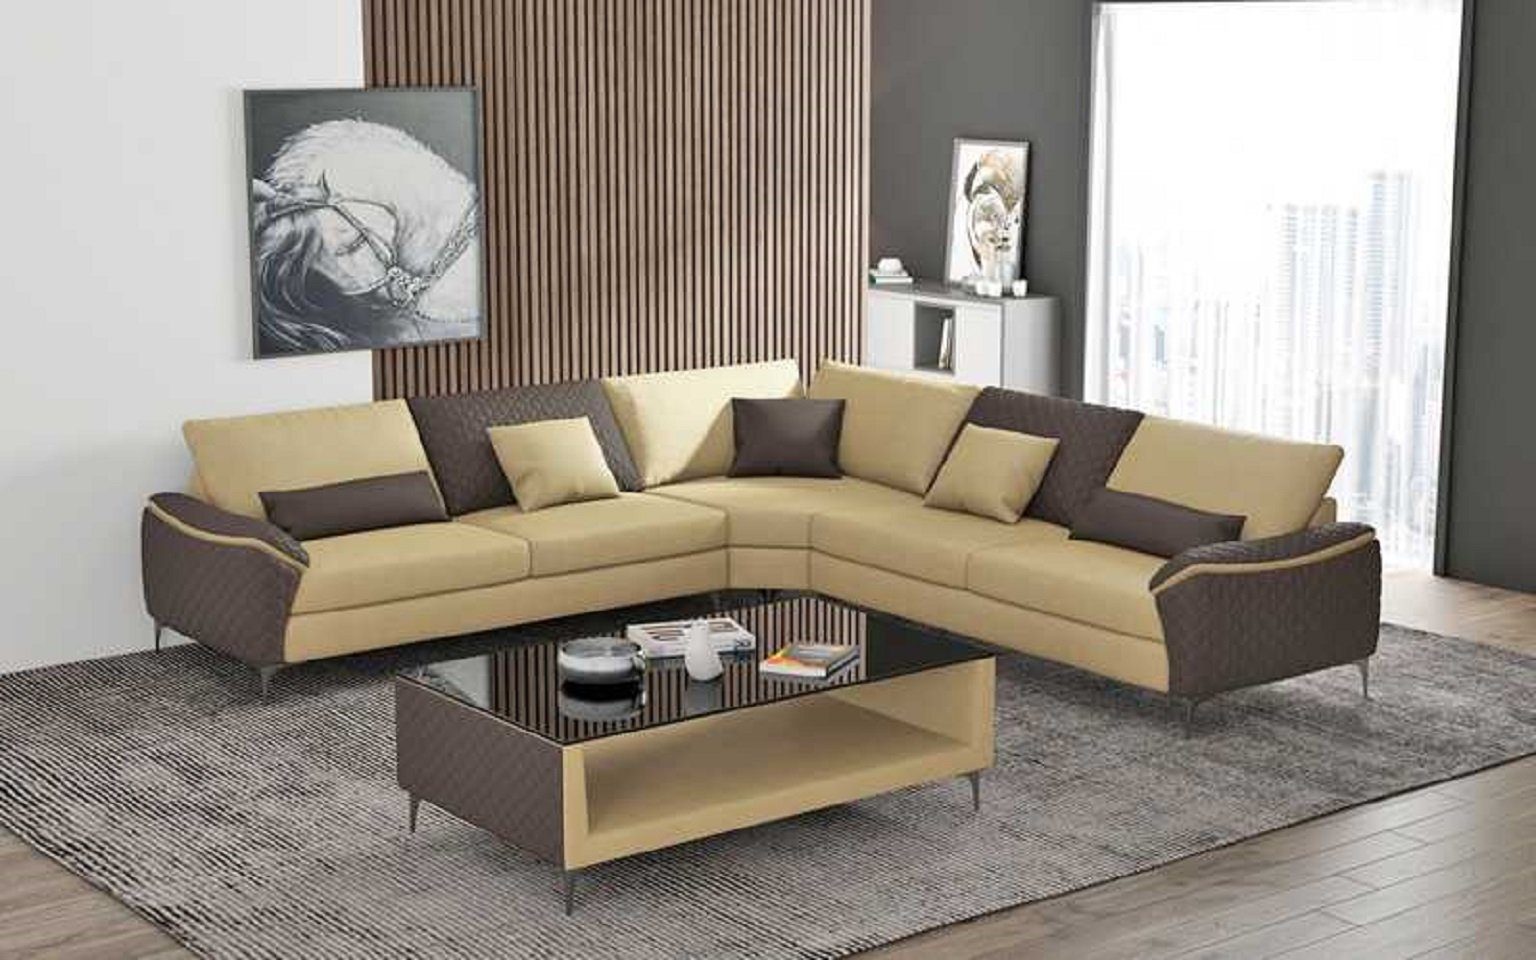 JVmoebel Ecksofa Luxus Eckgarnitur Ecksofa L Form Design Couch Sofa Luxus, 3 Teile, Made in Europe Beige